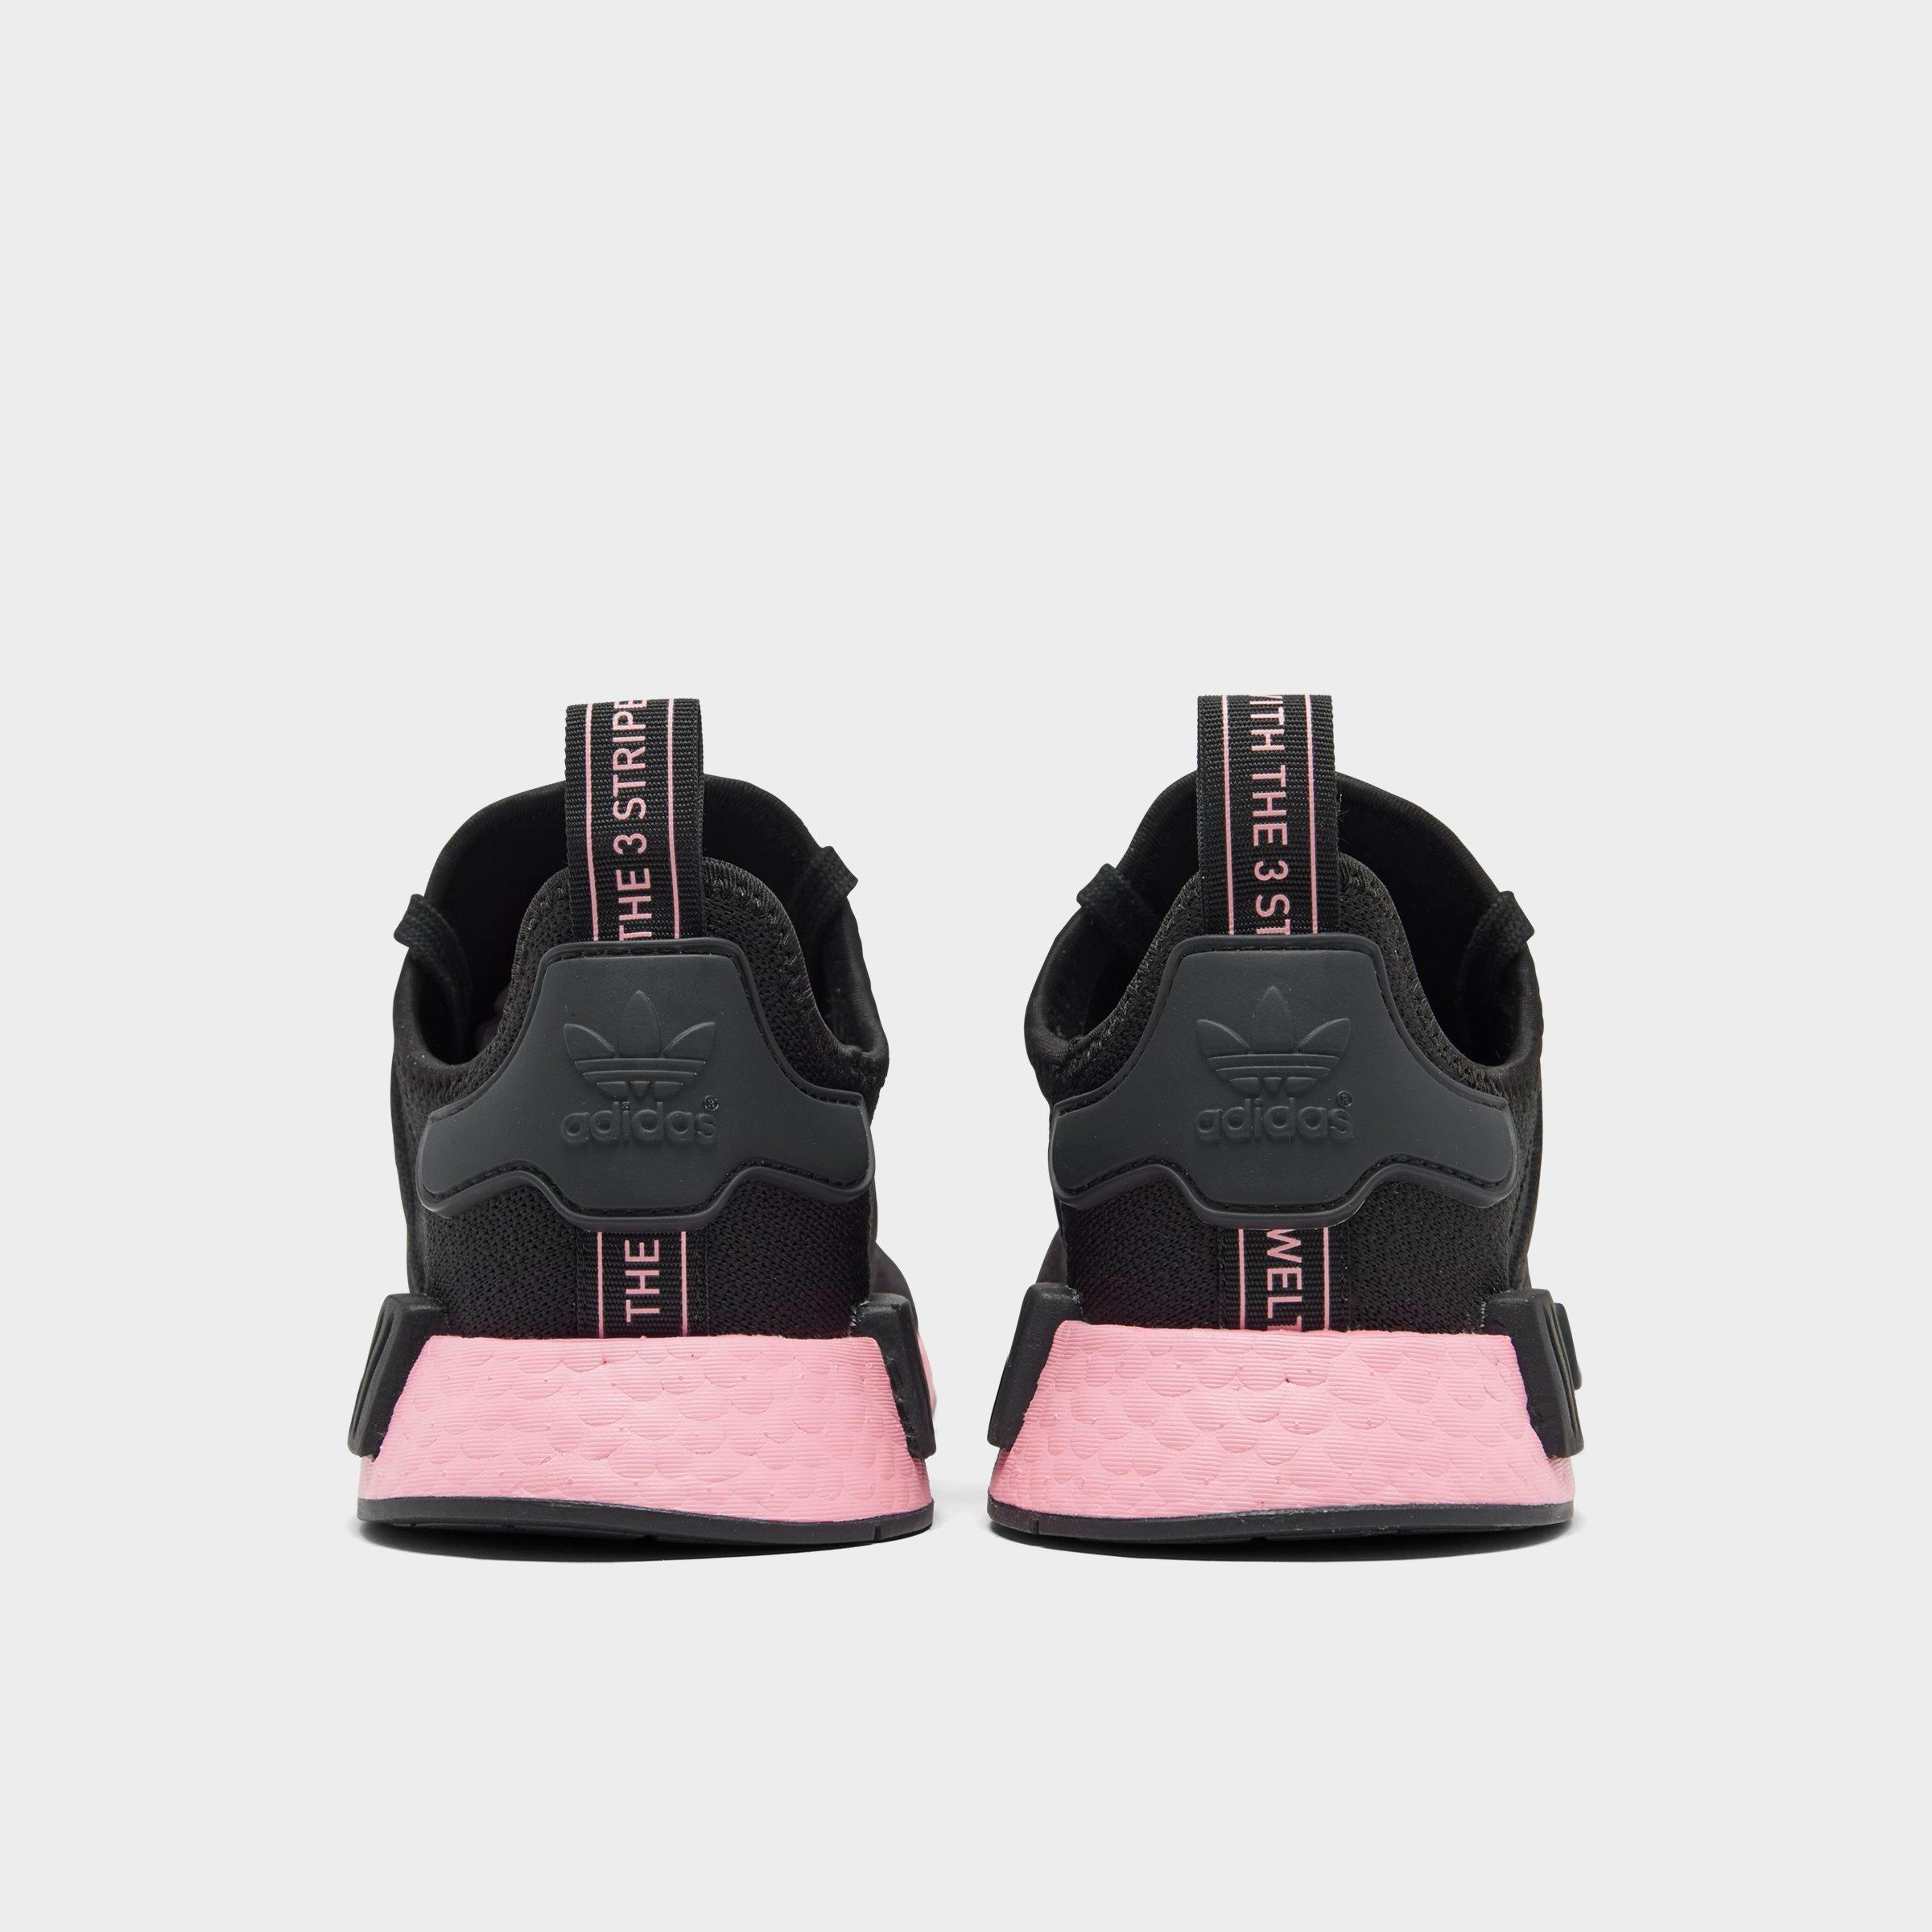 adidas nmd r1 grey and pink